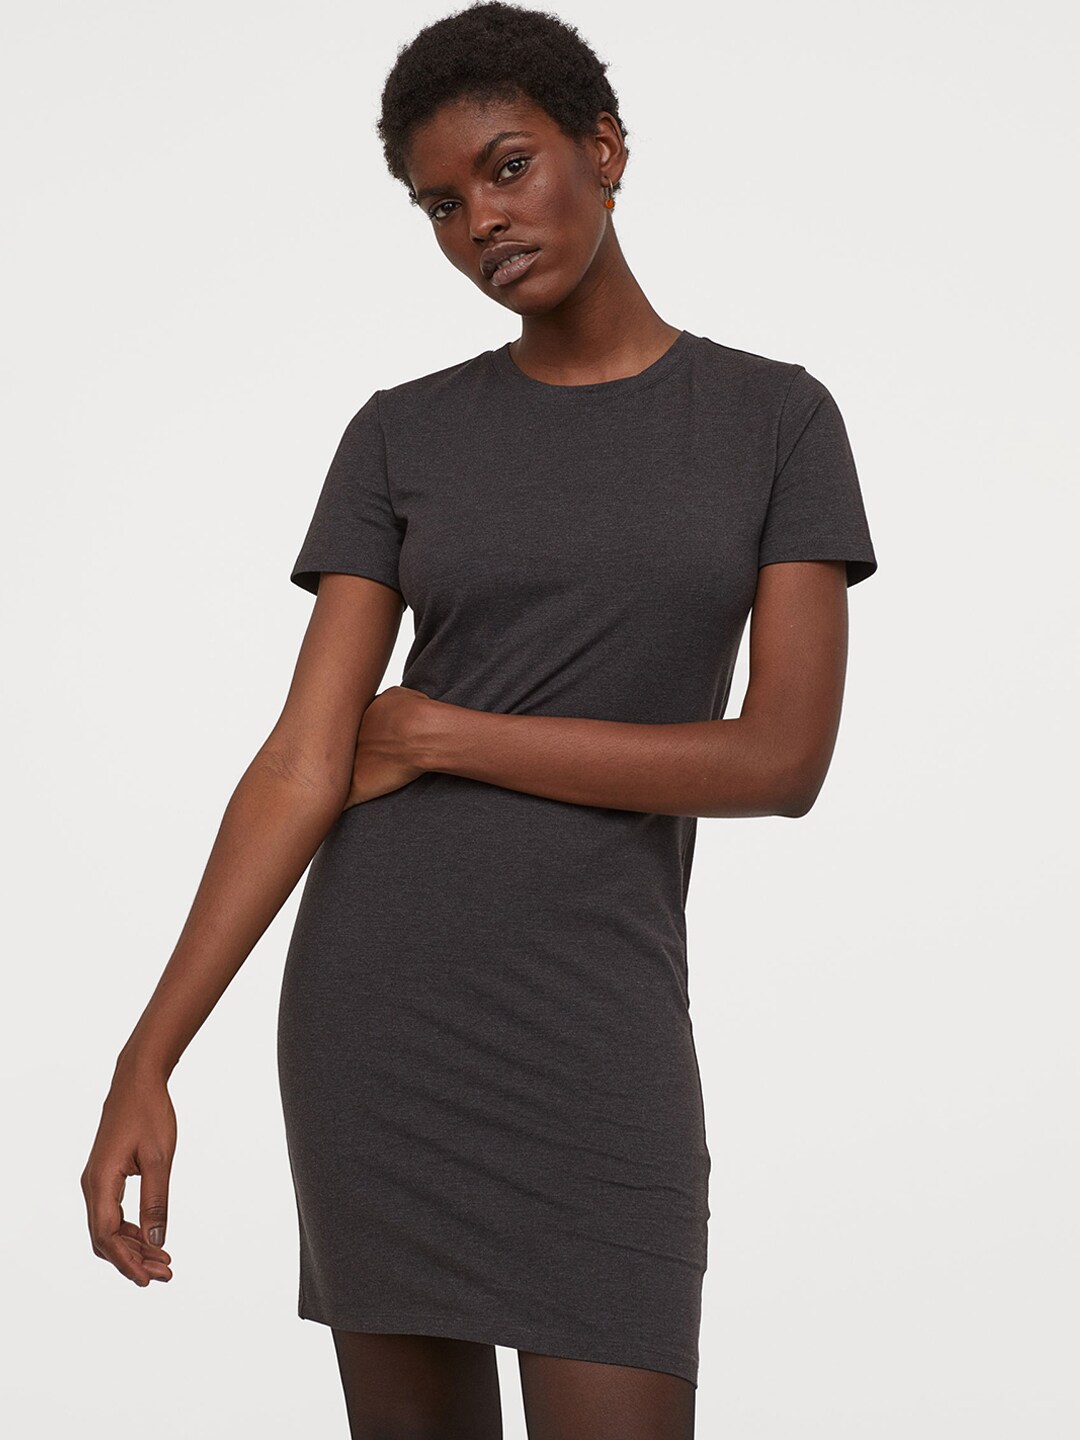 H&M Women Grey Solid T-shirt Dress